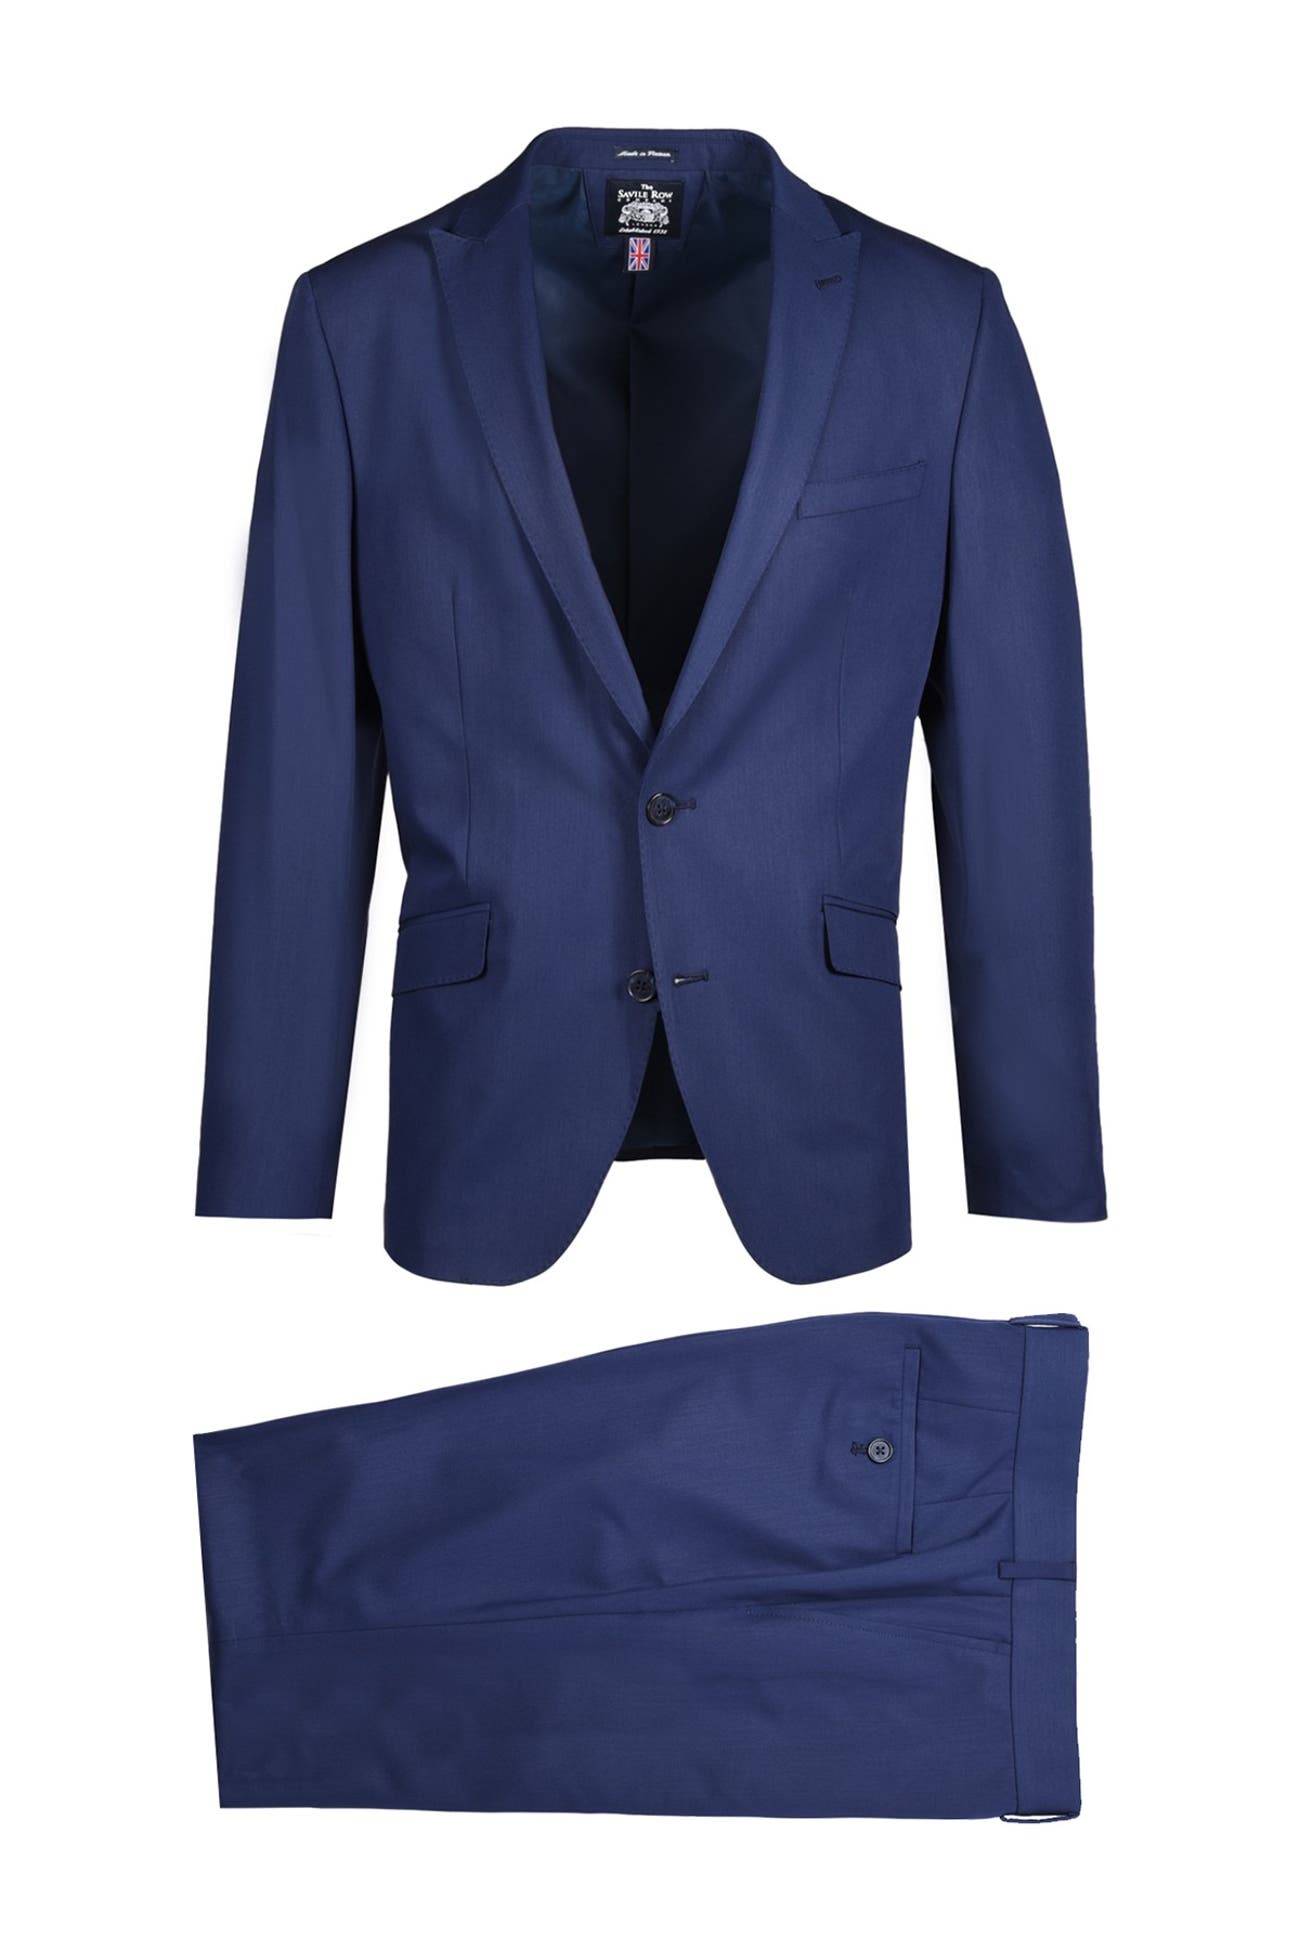 SAVILE ROW CO | Navy Peak Lapel Slim Fit Stretch Fabric Suit ...